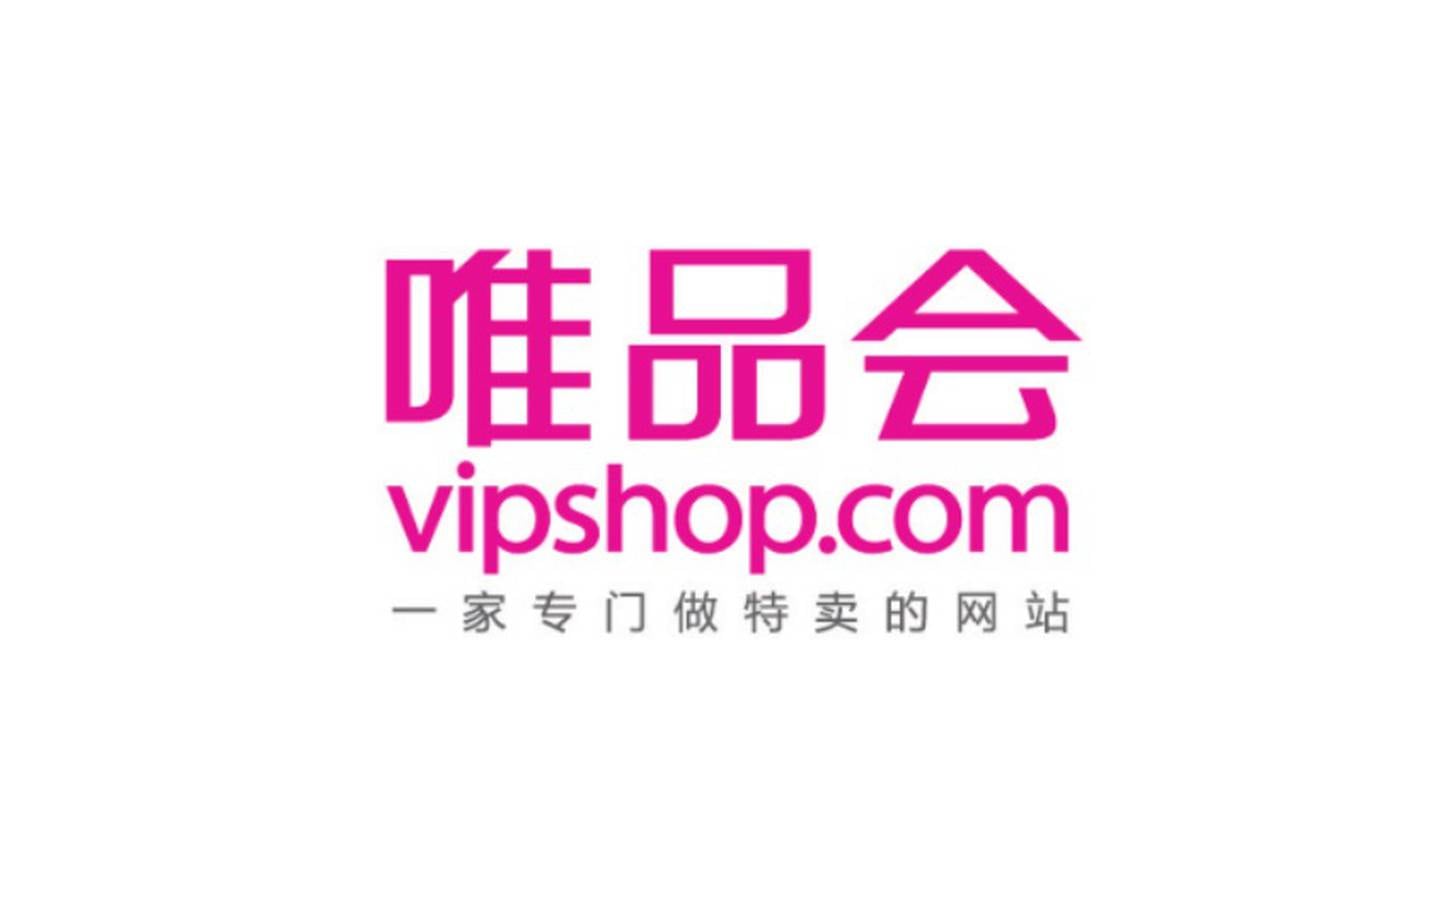 Vipshop logo. Vipshop